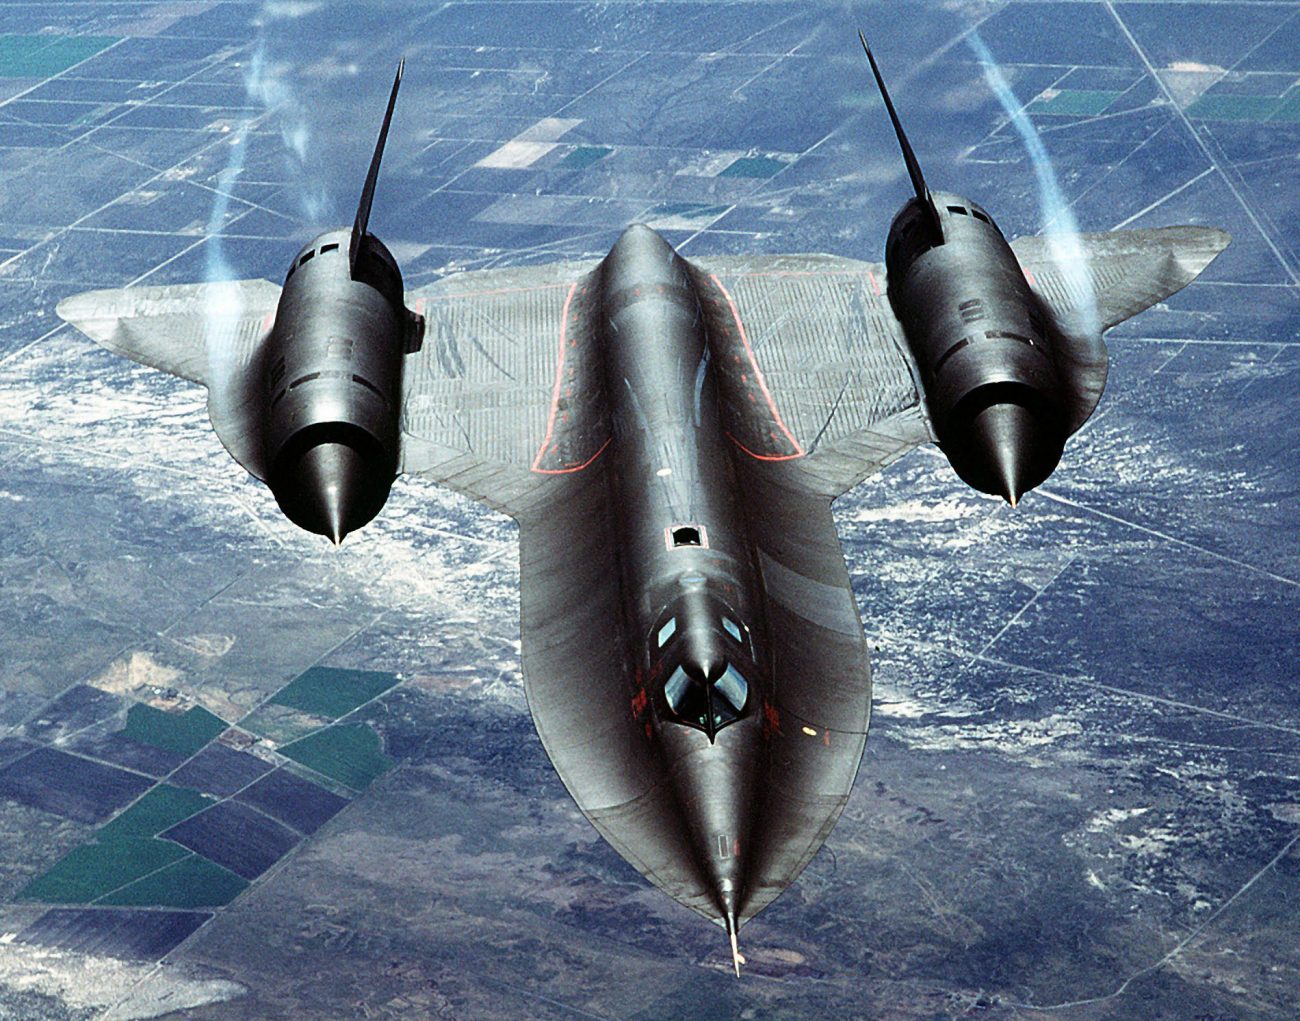 SR-71 'Blackbird'